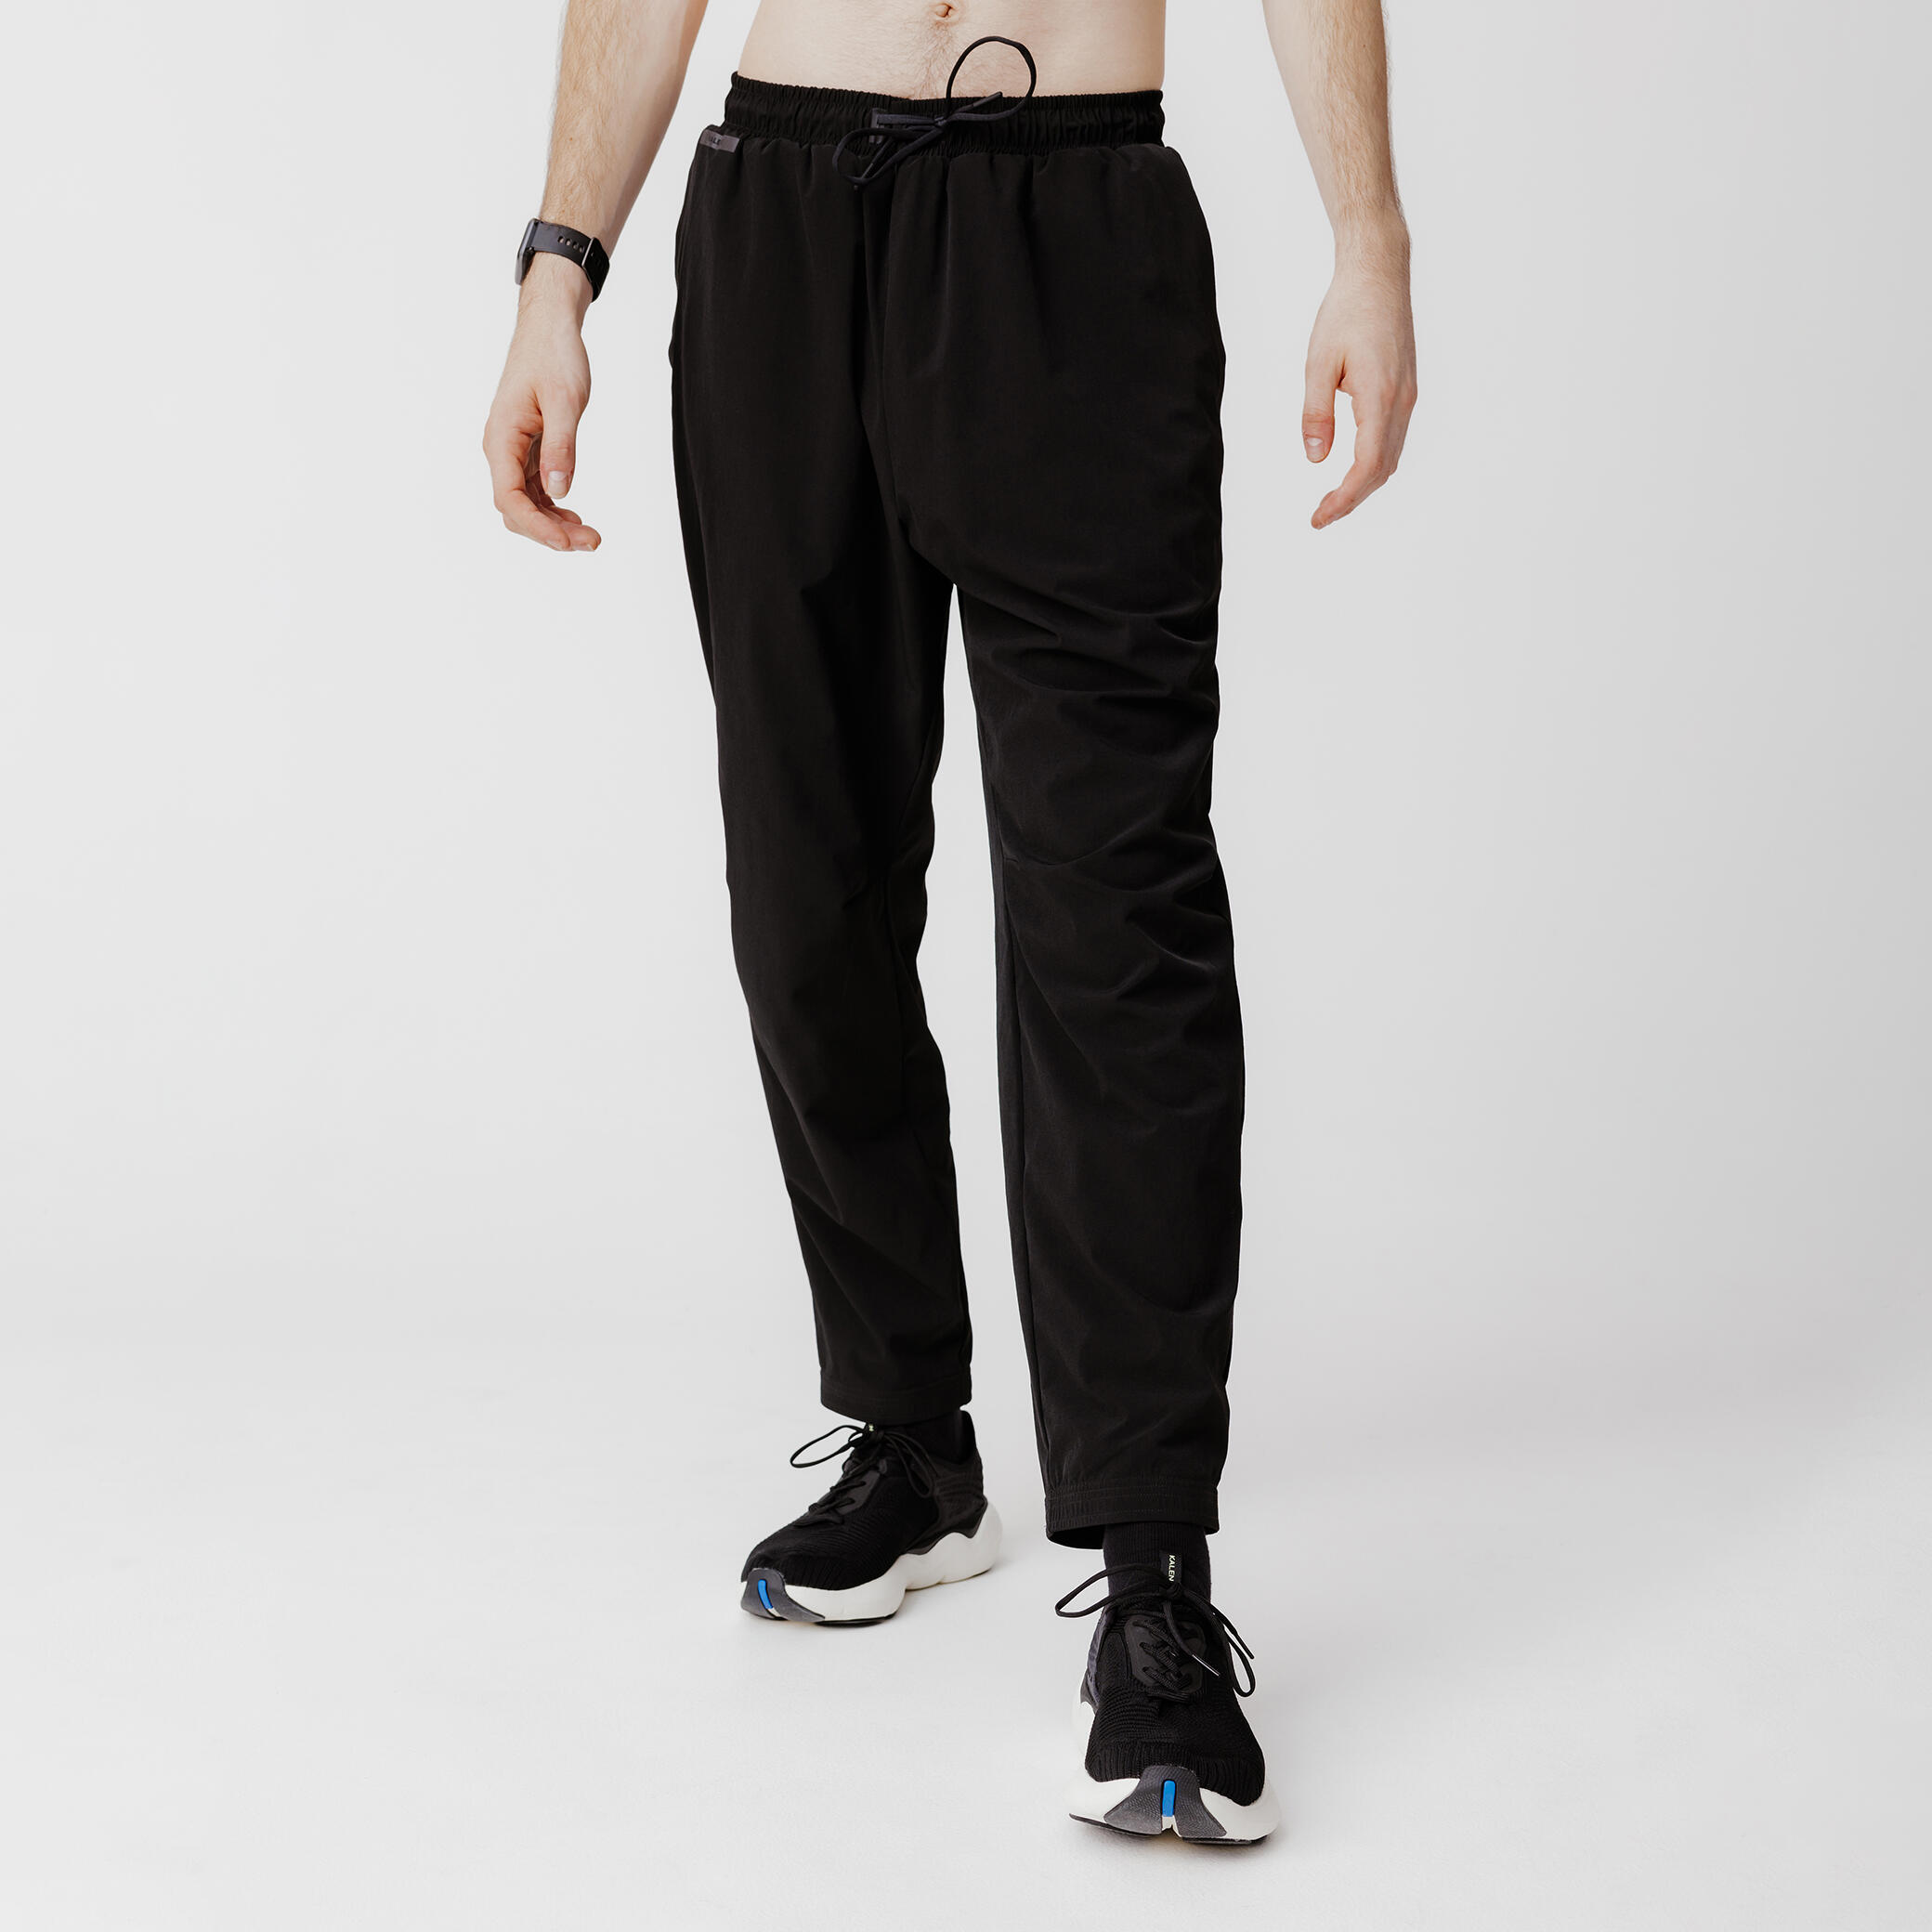 Dry 500 Men's Breathable Running Trousers - black